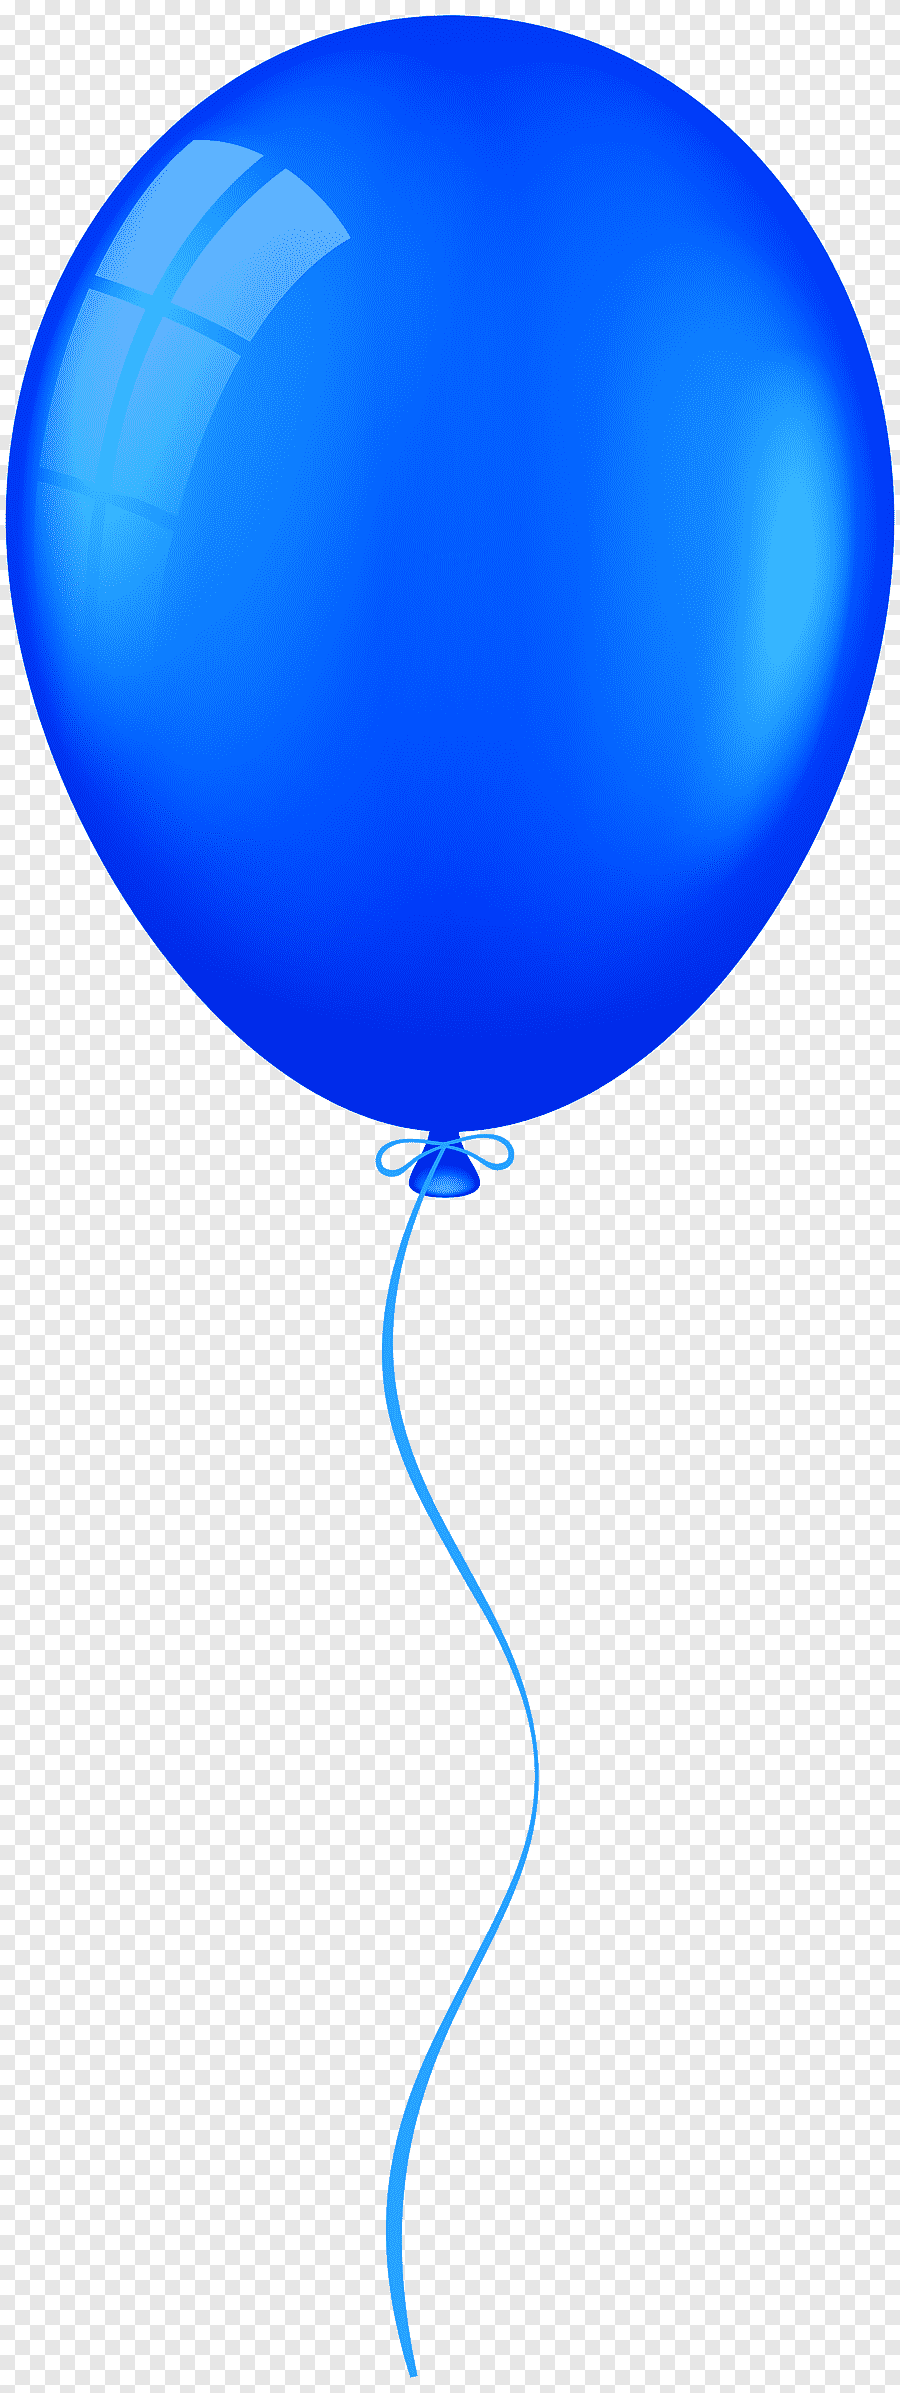 Картинка шар на прозрачном фоне. Синий воздушный шар. Синий шарик. Голубой воздушный шарик. Синий шарик на прозрачном фоне.